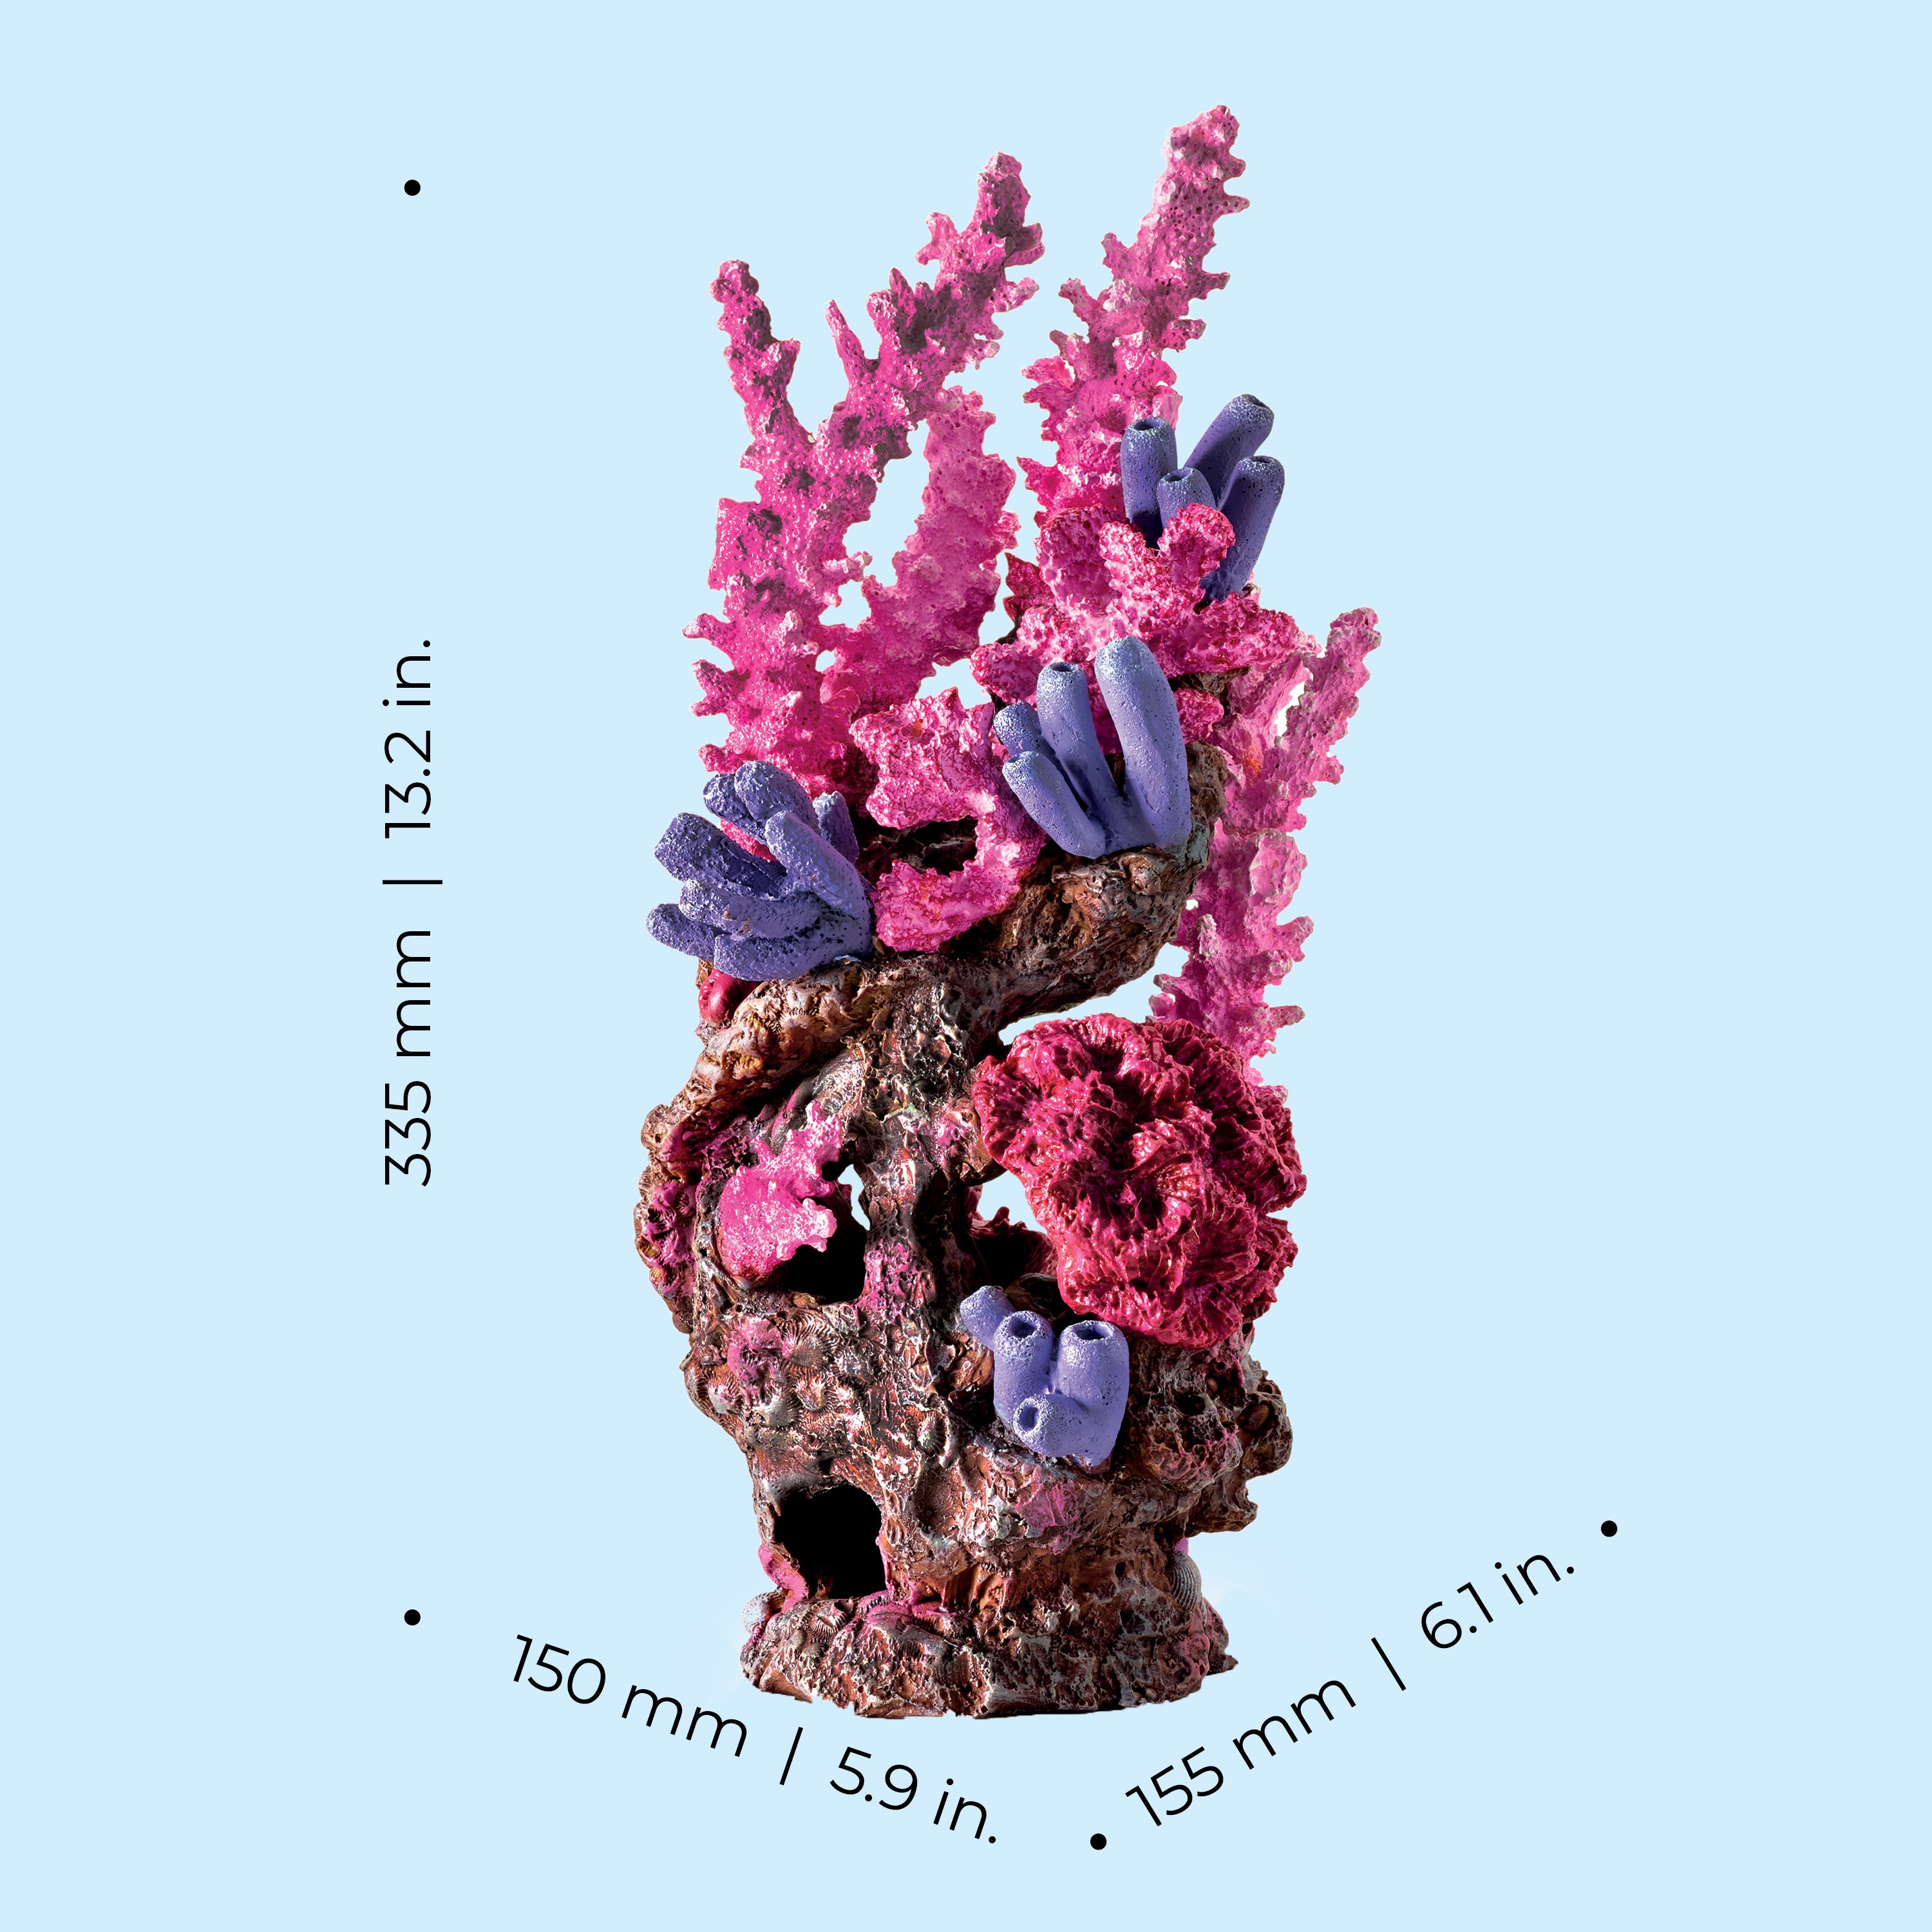 Reef Sculptures - dimensions